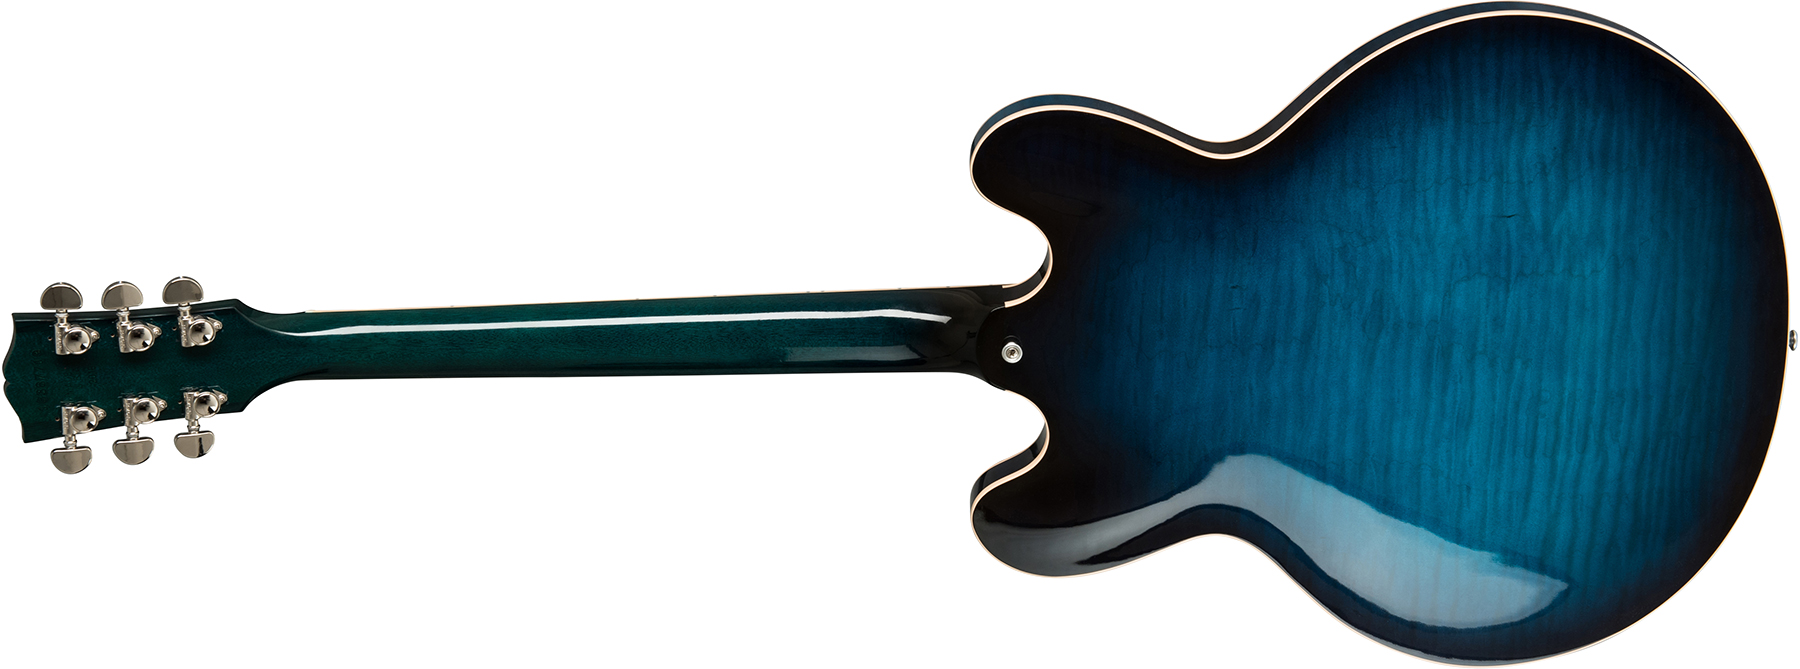 Gibson Es-335 Dot 2019 Hh Ht Rw - Blue Burst - Semi-hollow electric guitar - Variation 1